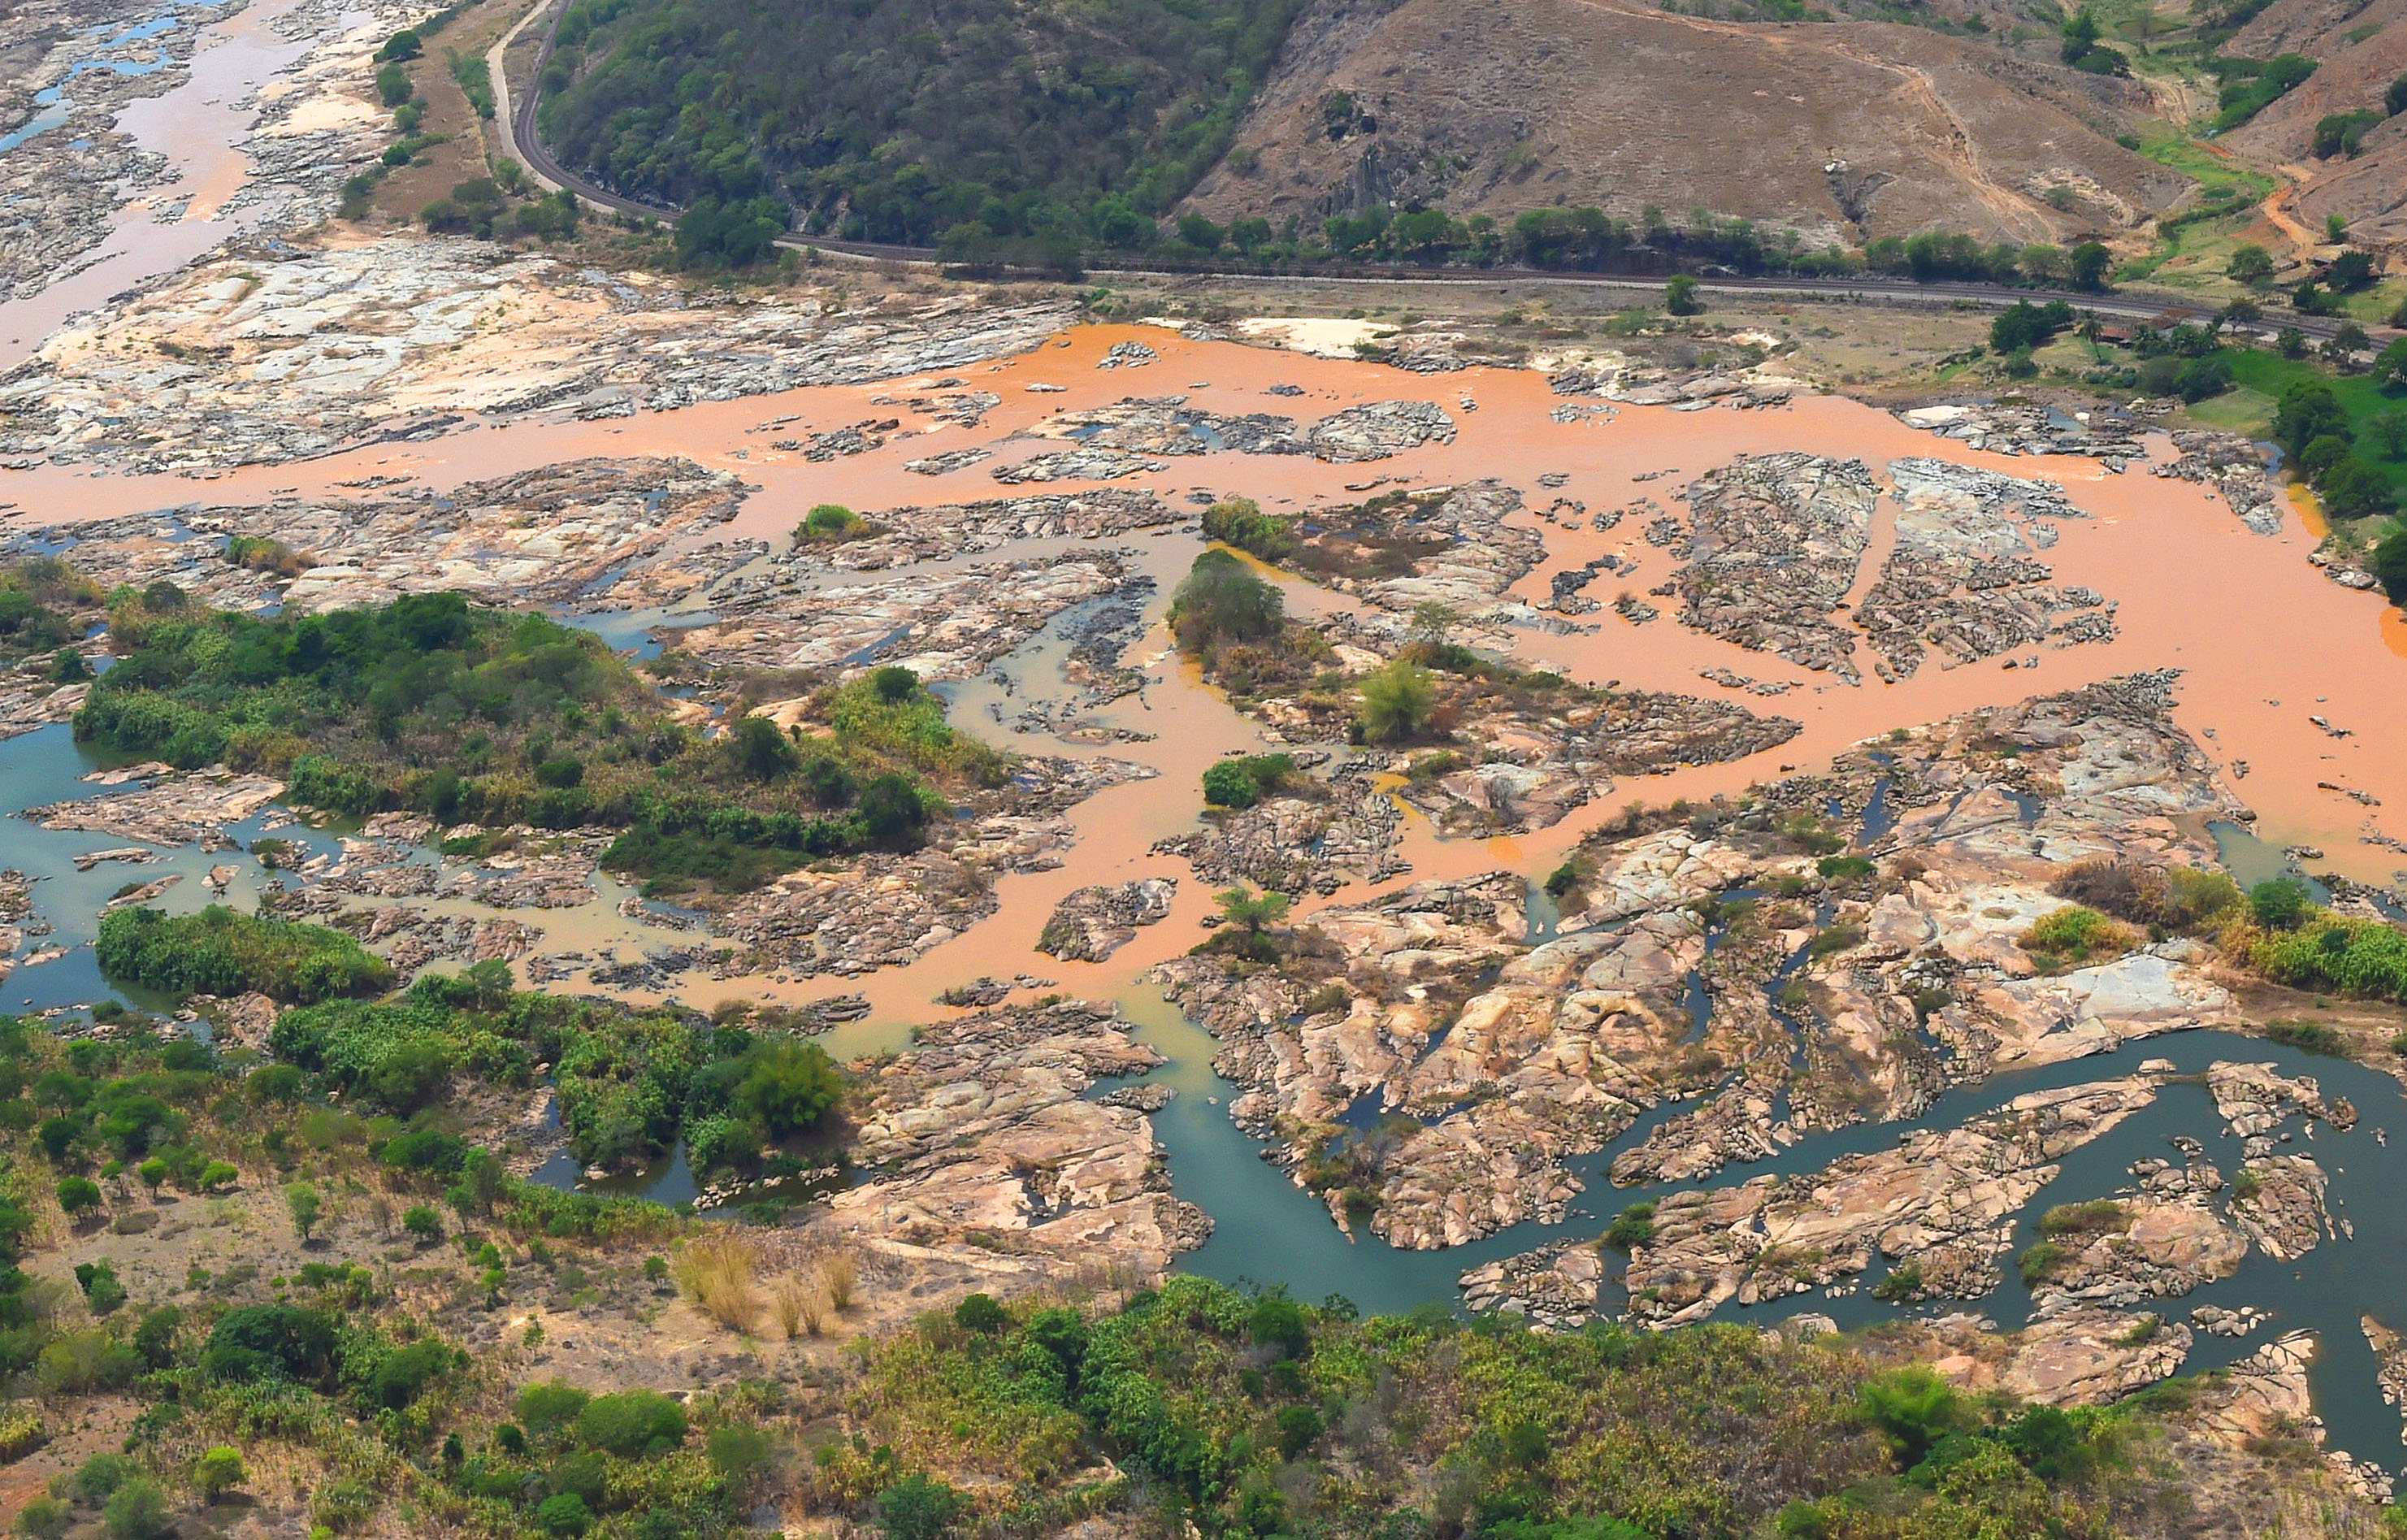 Toxic Waste in Rio Doce Basin